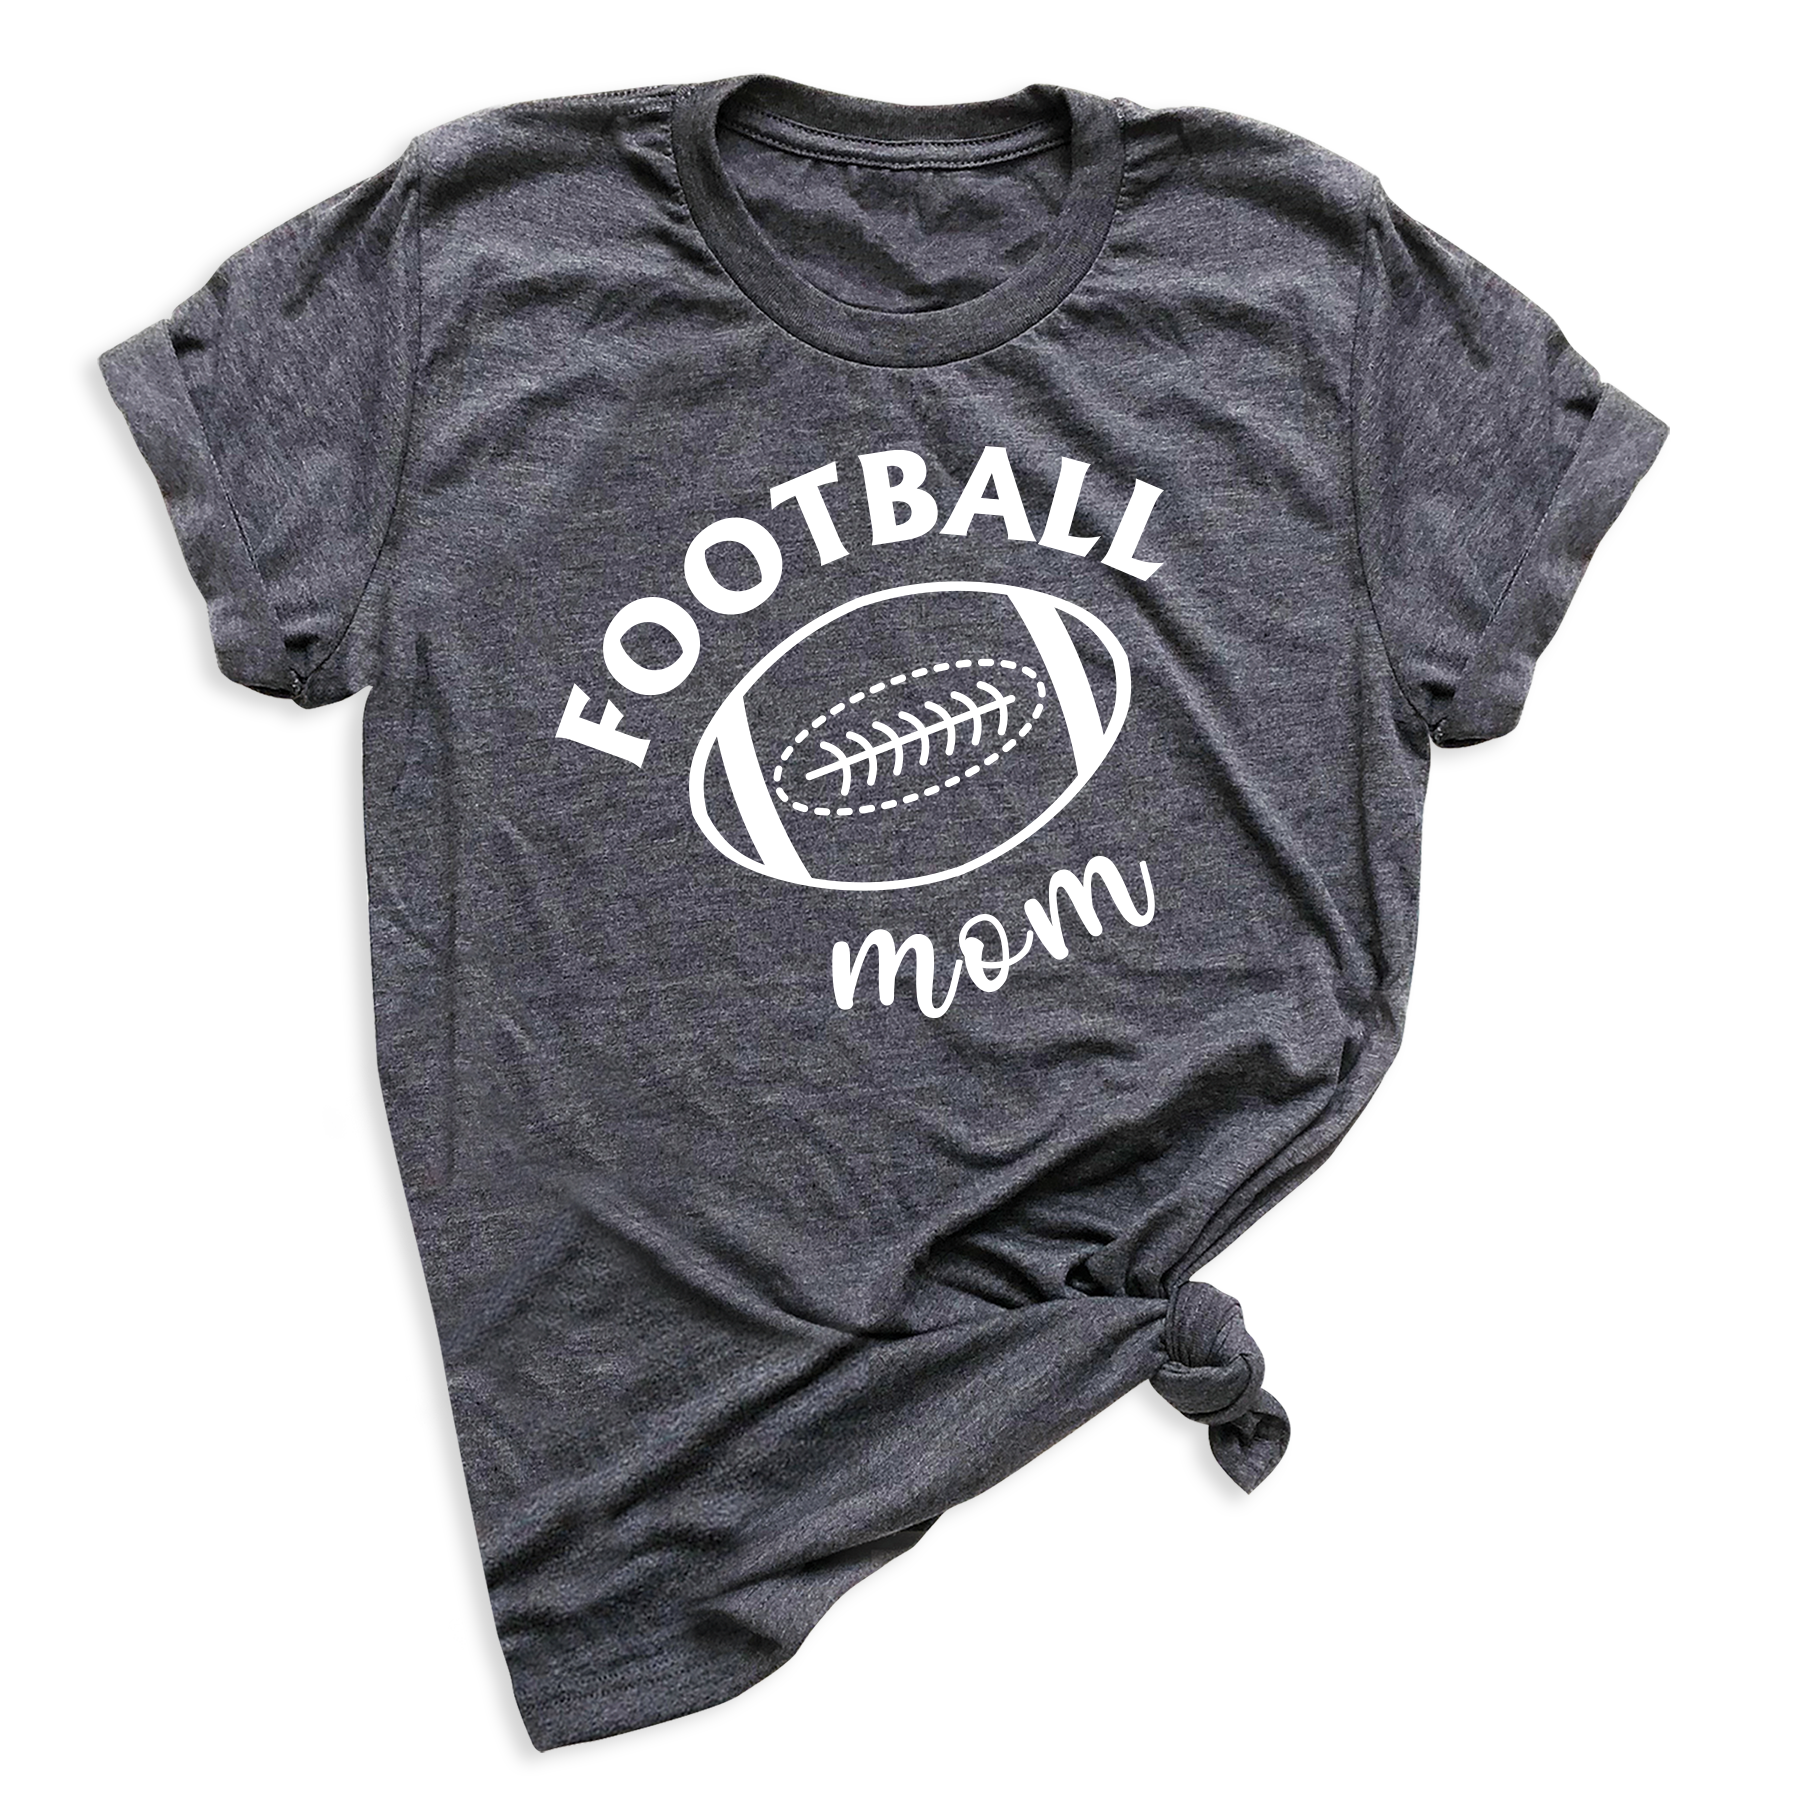 football mom tee shirts